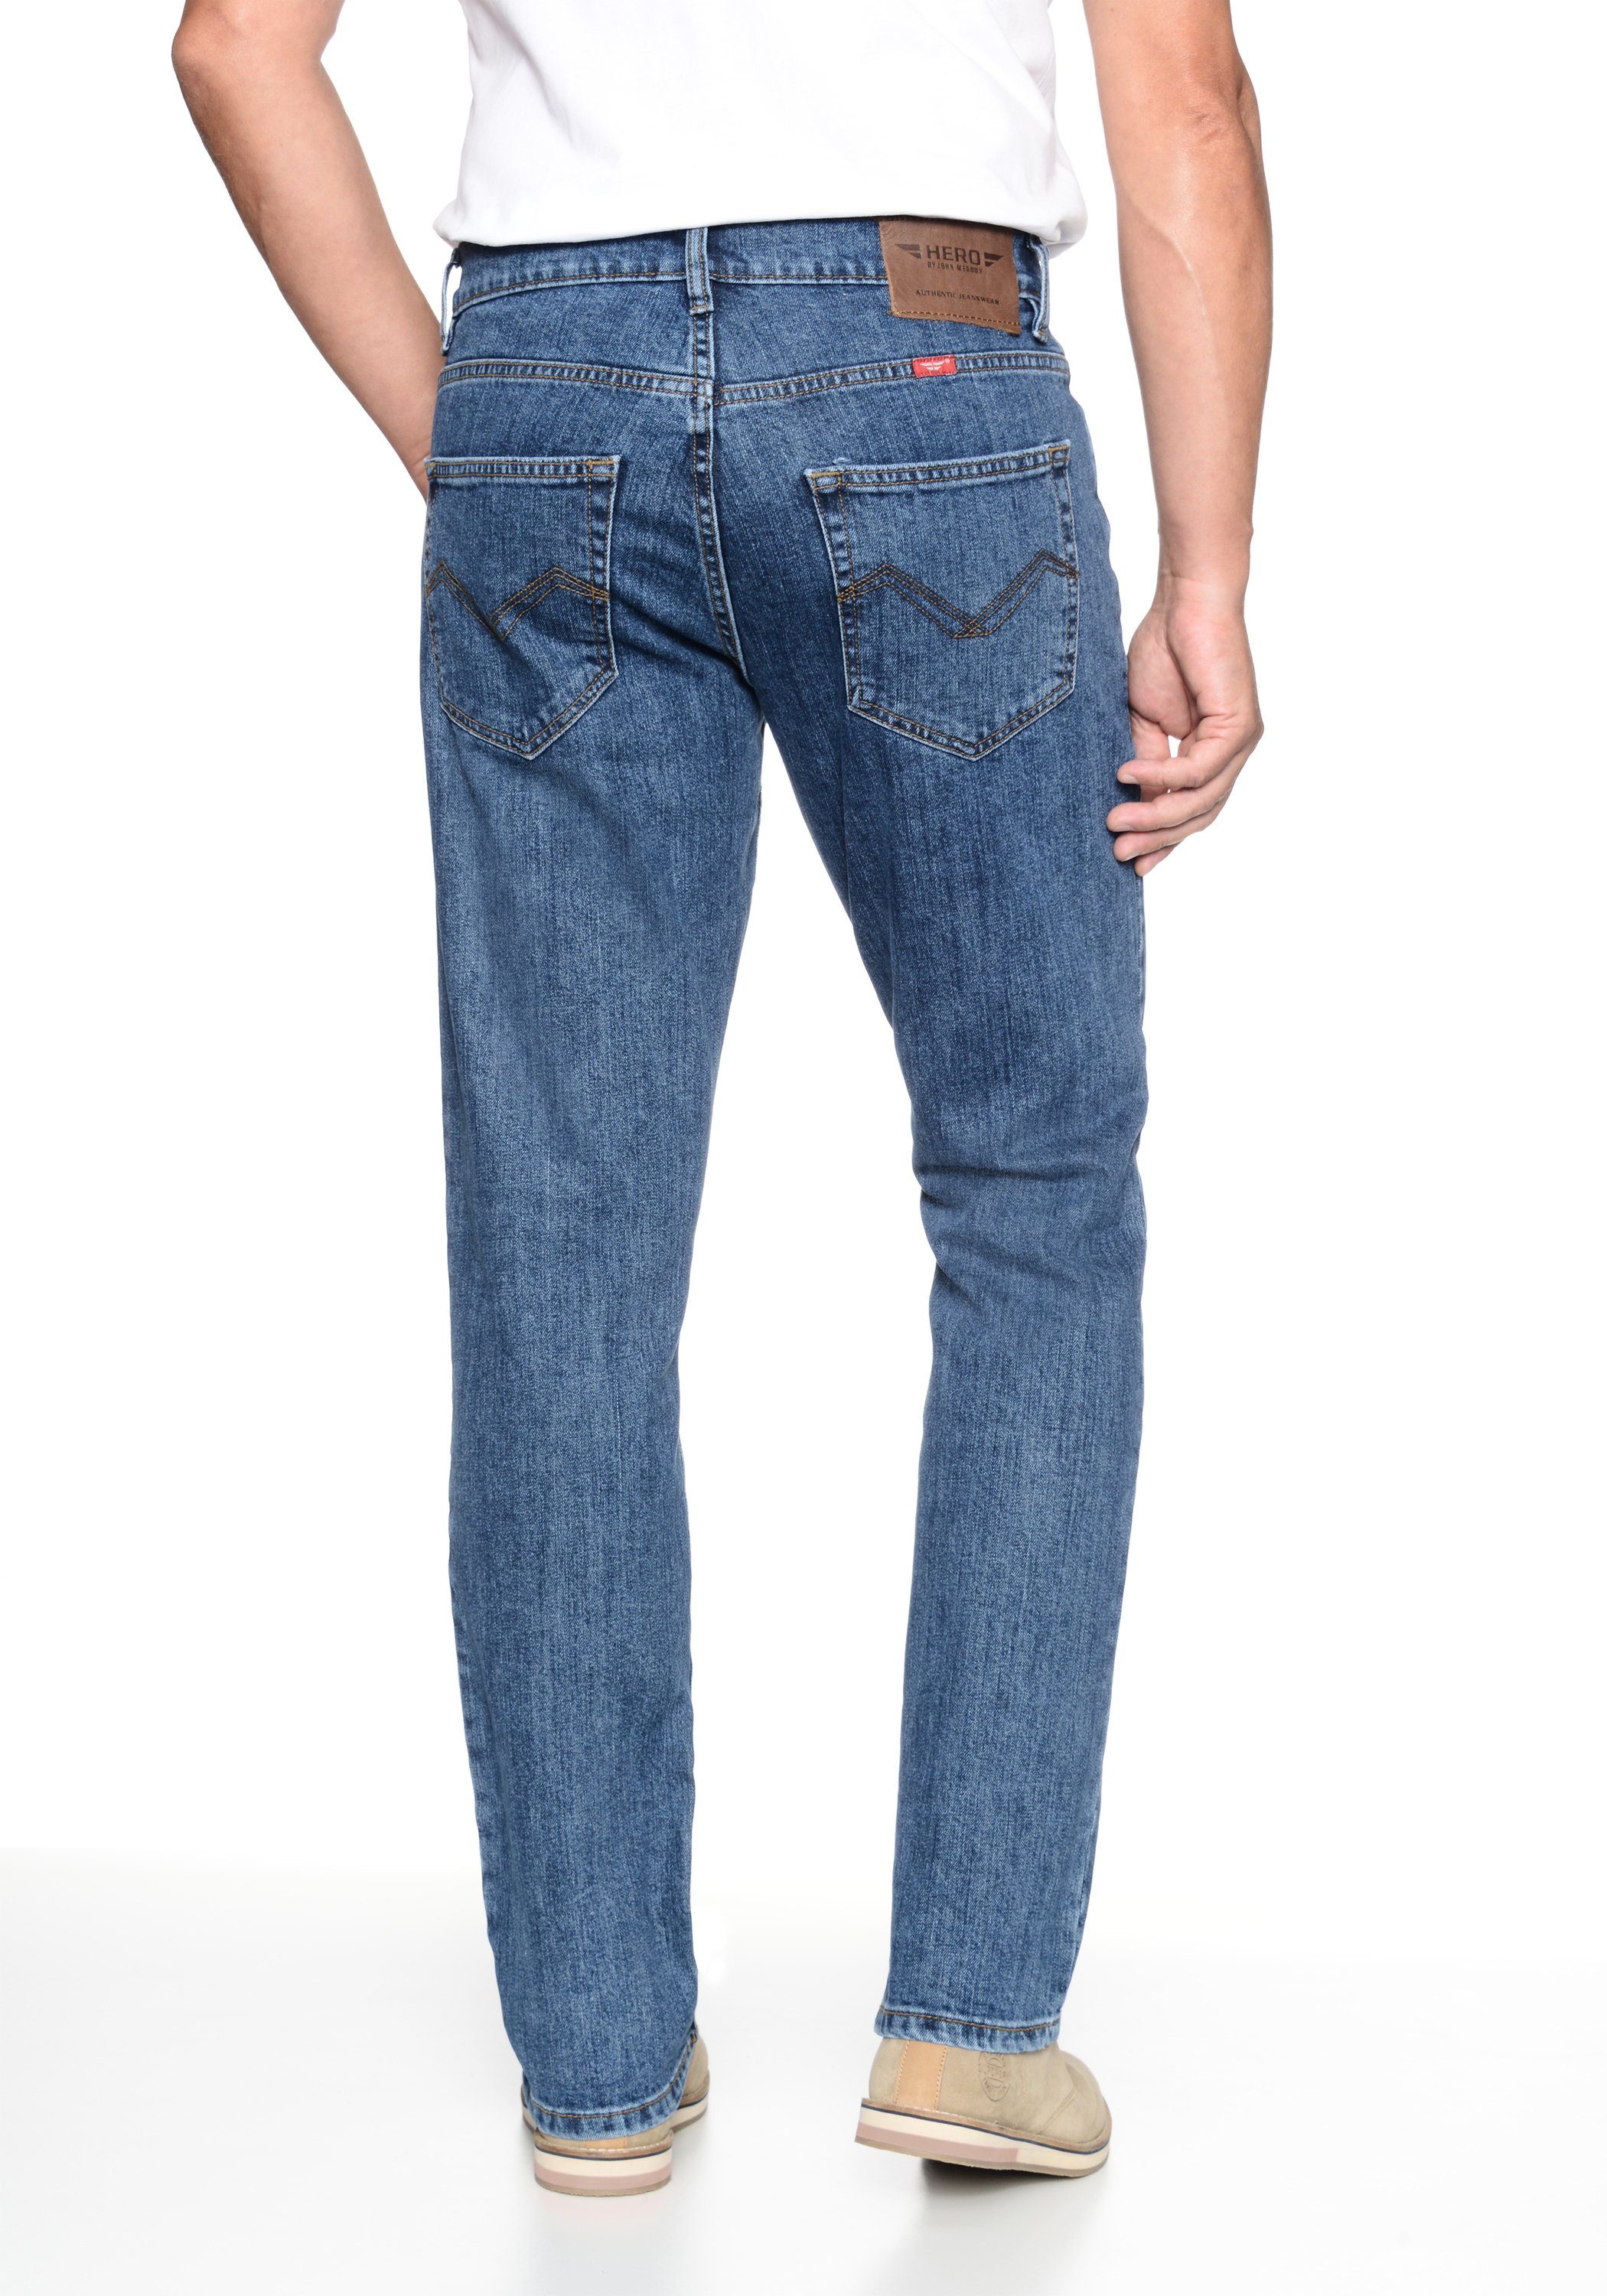 Medoox 5-Pocket-Jeans by John Straight Regular blue HERO Stretch Denver stone